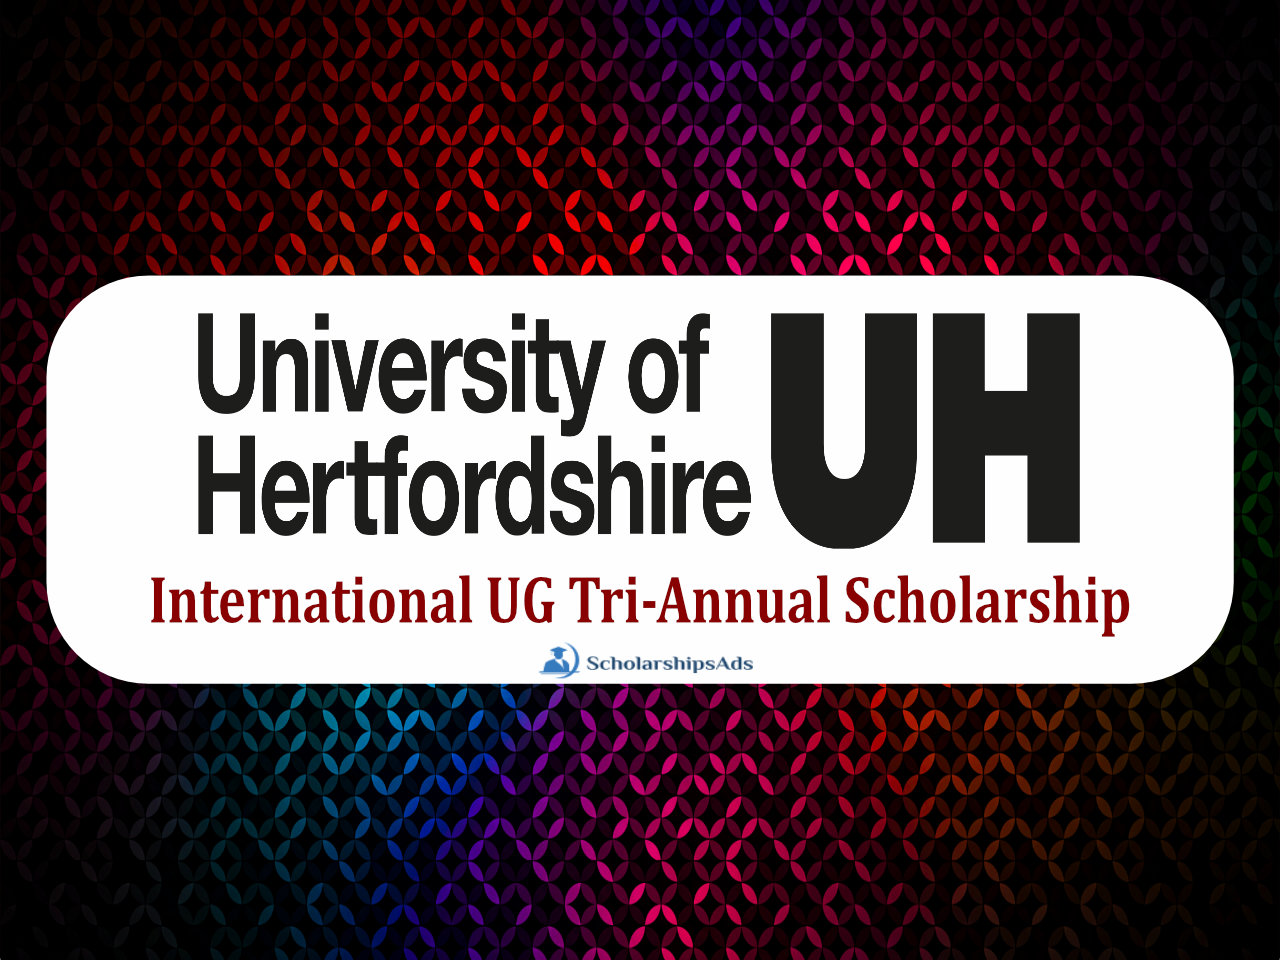 International UG Tri-Annual Scholarships.